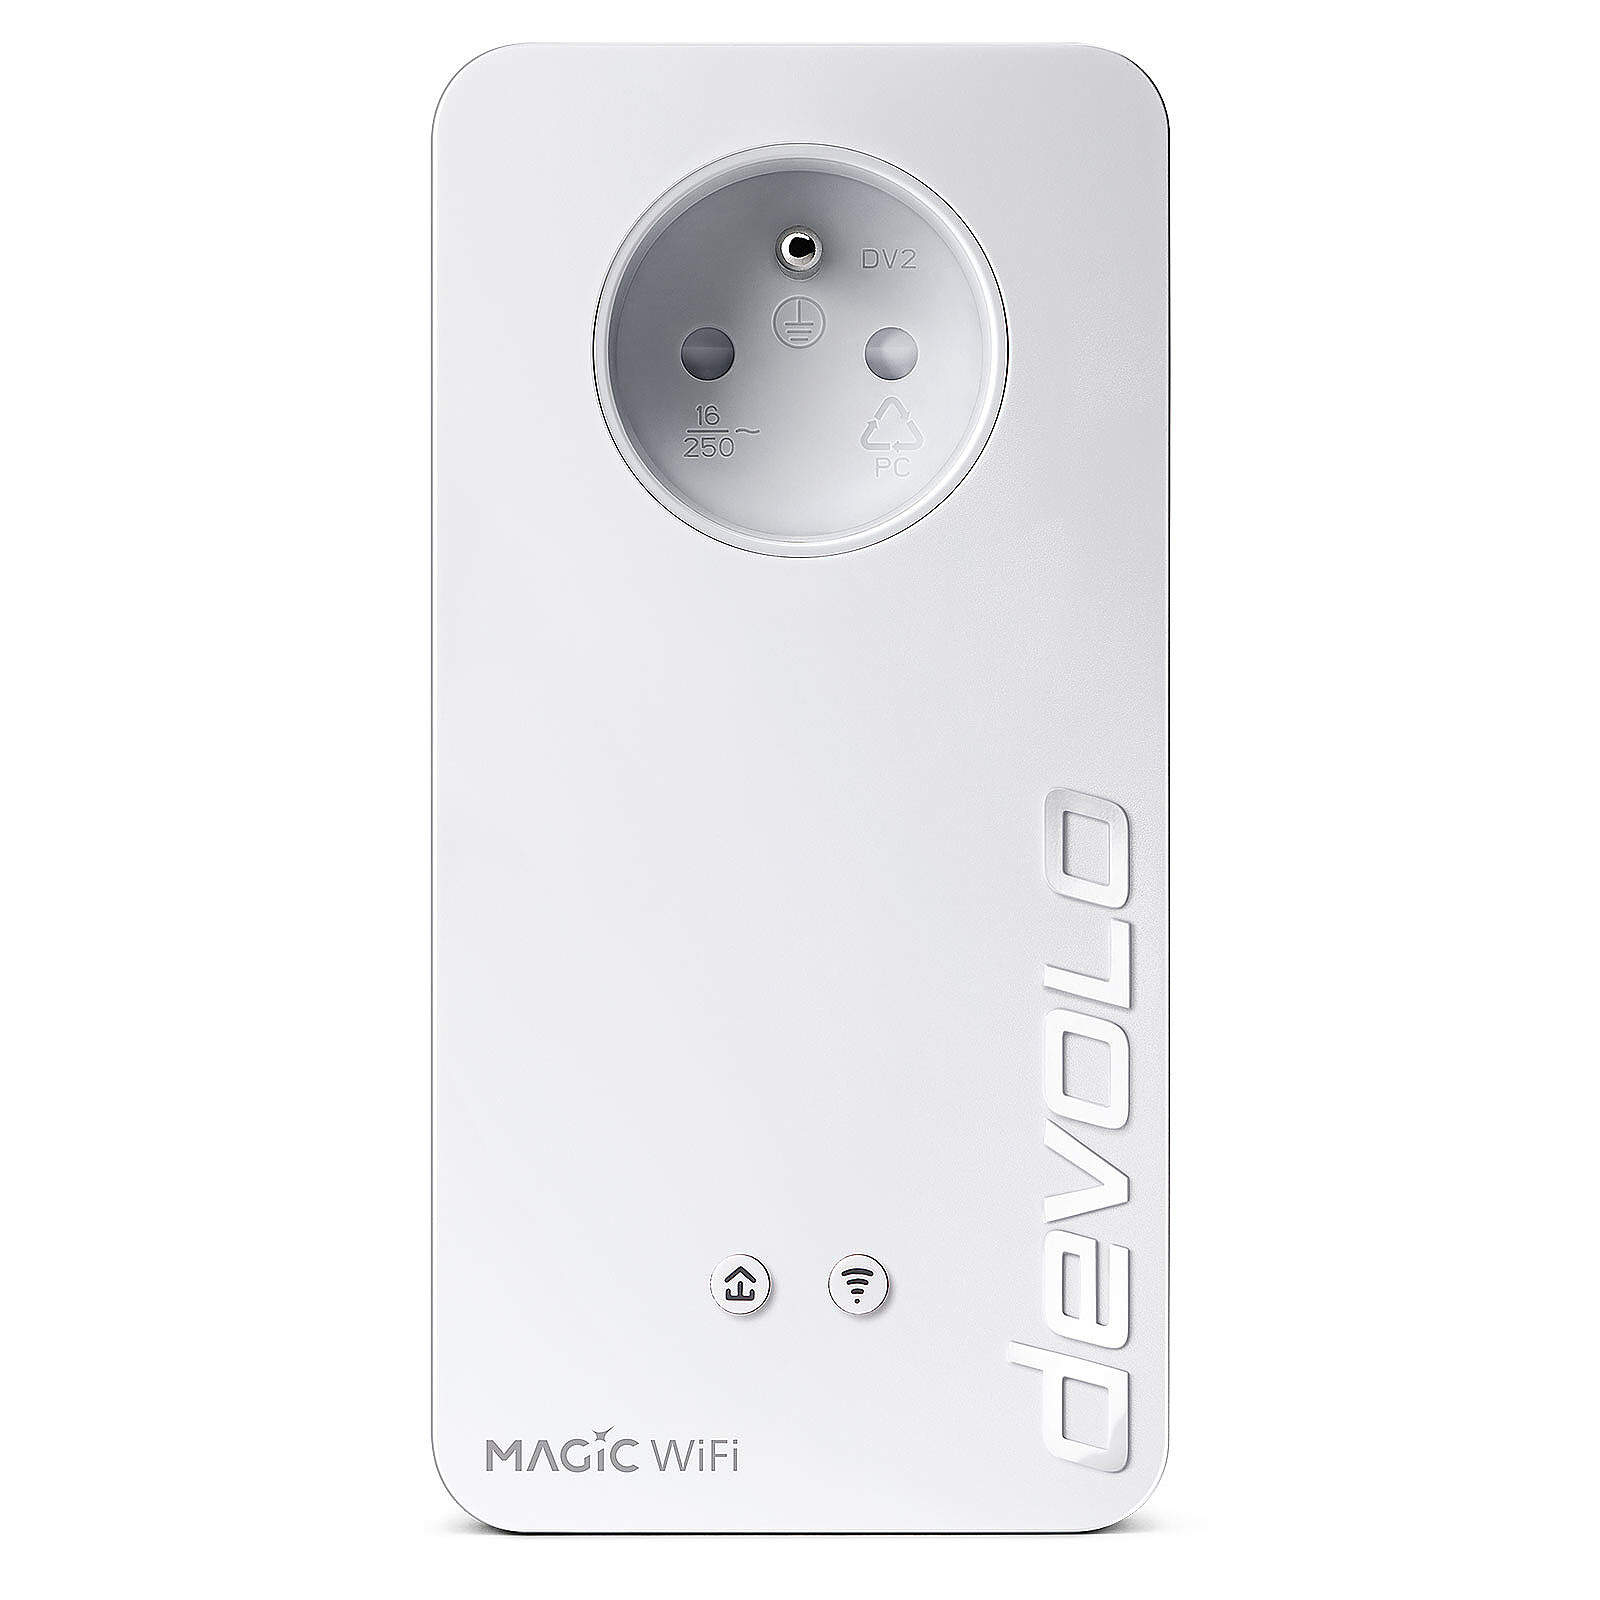 devolo Magic 1 LAN + devolo Magic 1 Wi-Fi (pair) - Powerline adapter - LDLC  3-year warranty